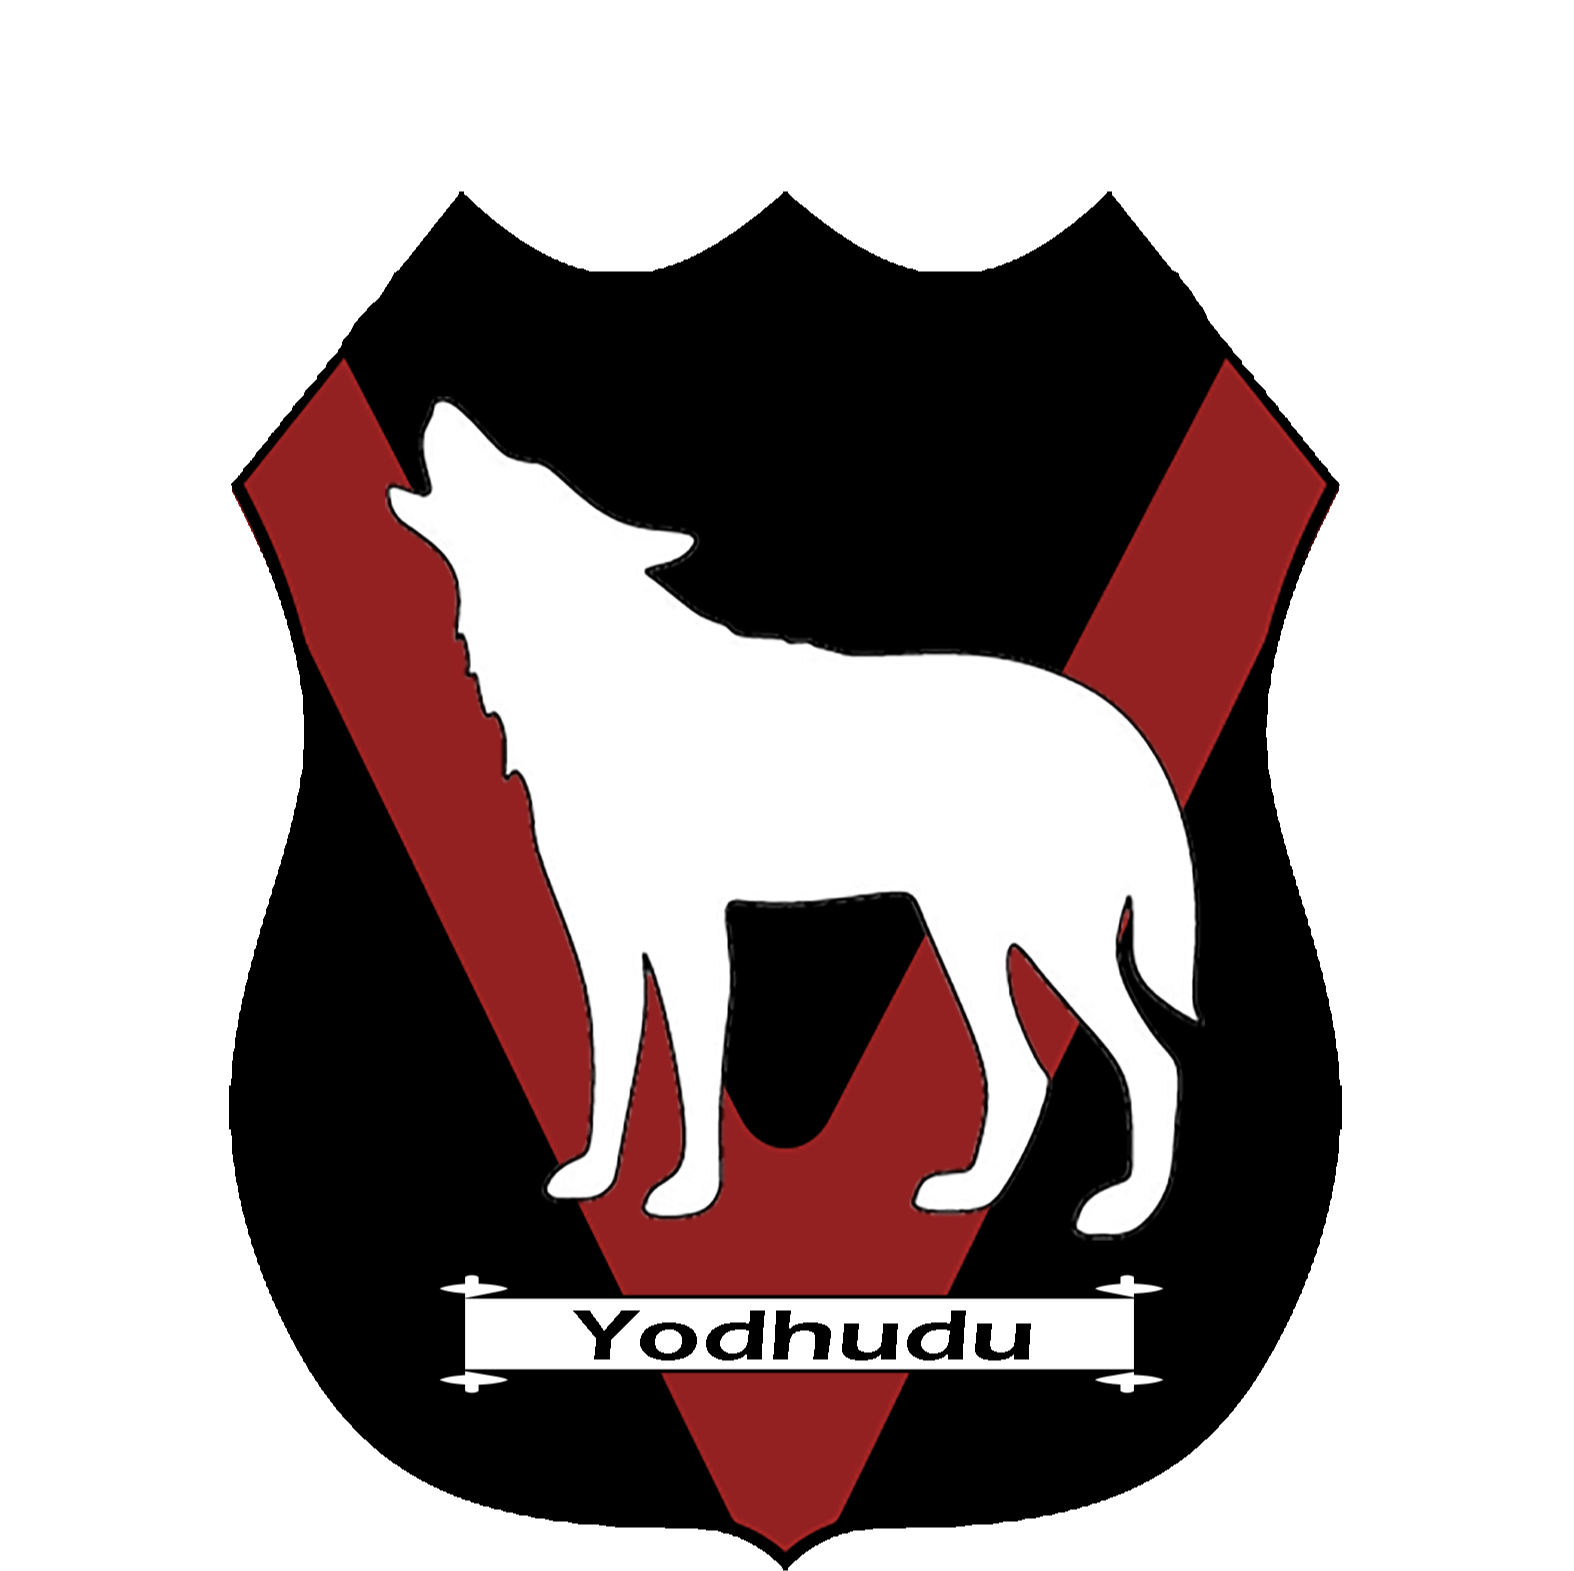 Yodhudu (Warrior)